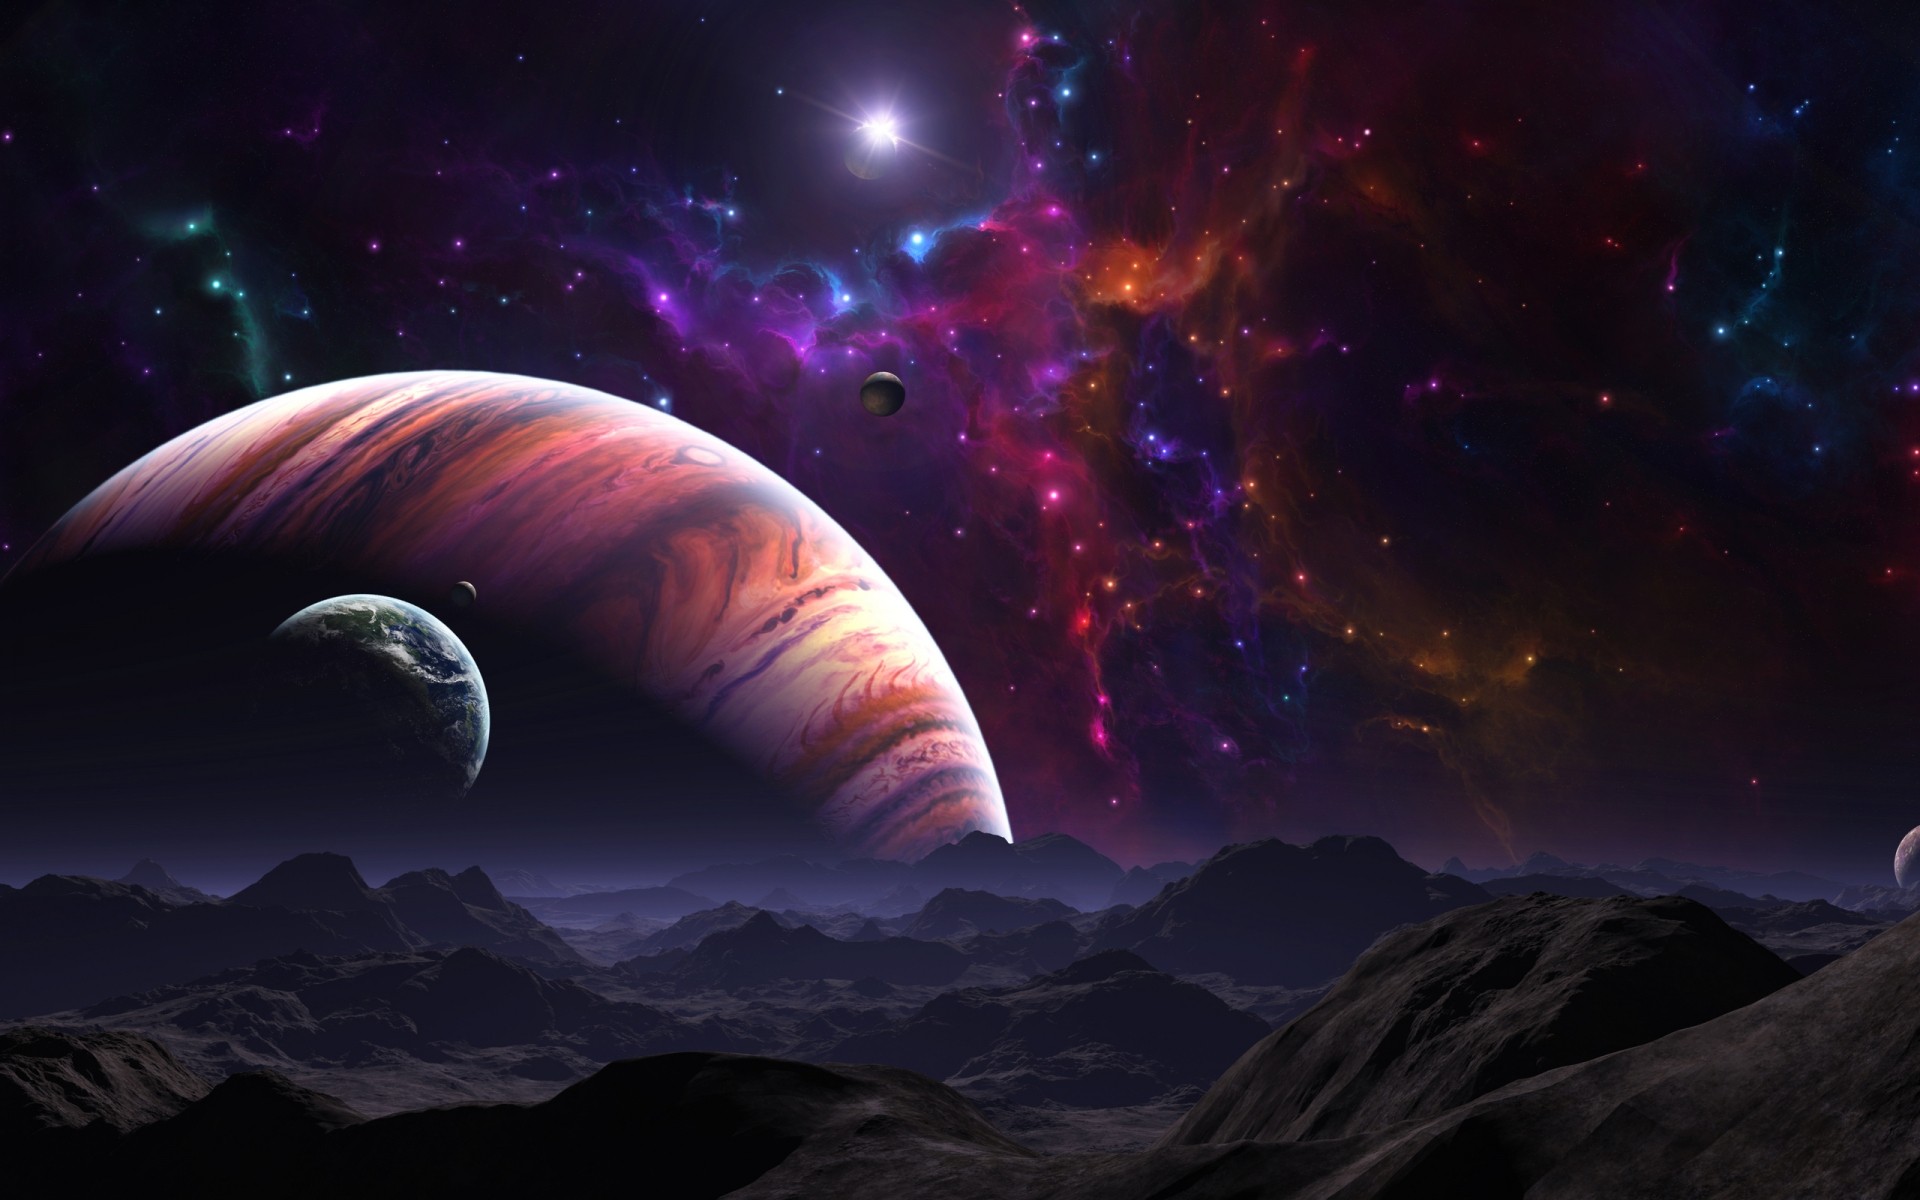 space astronomy moon galaxy planet science exploration cosmos astrology plantes terra stars sky dark night